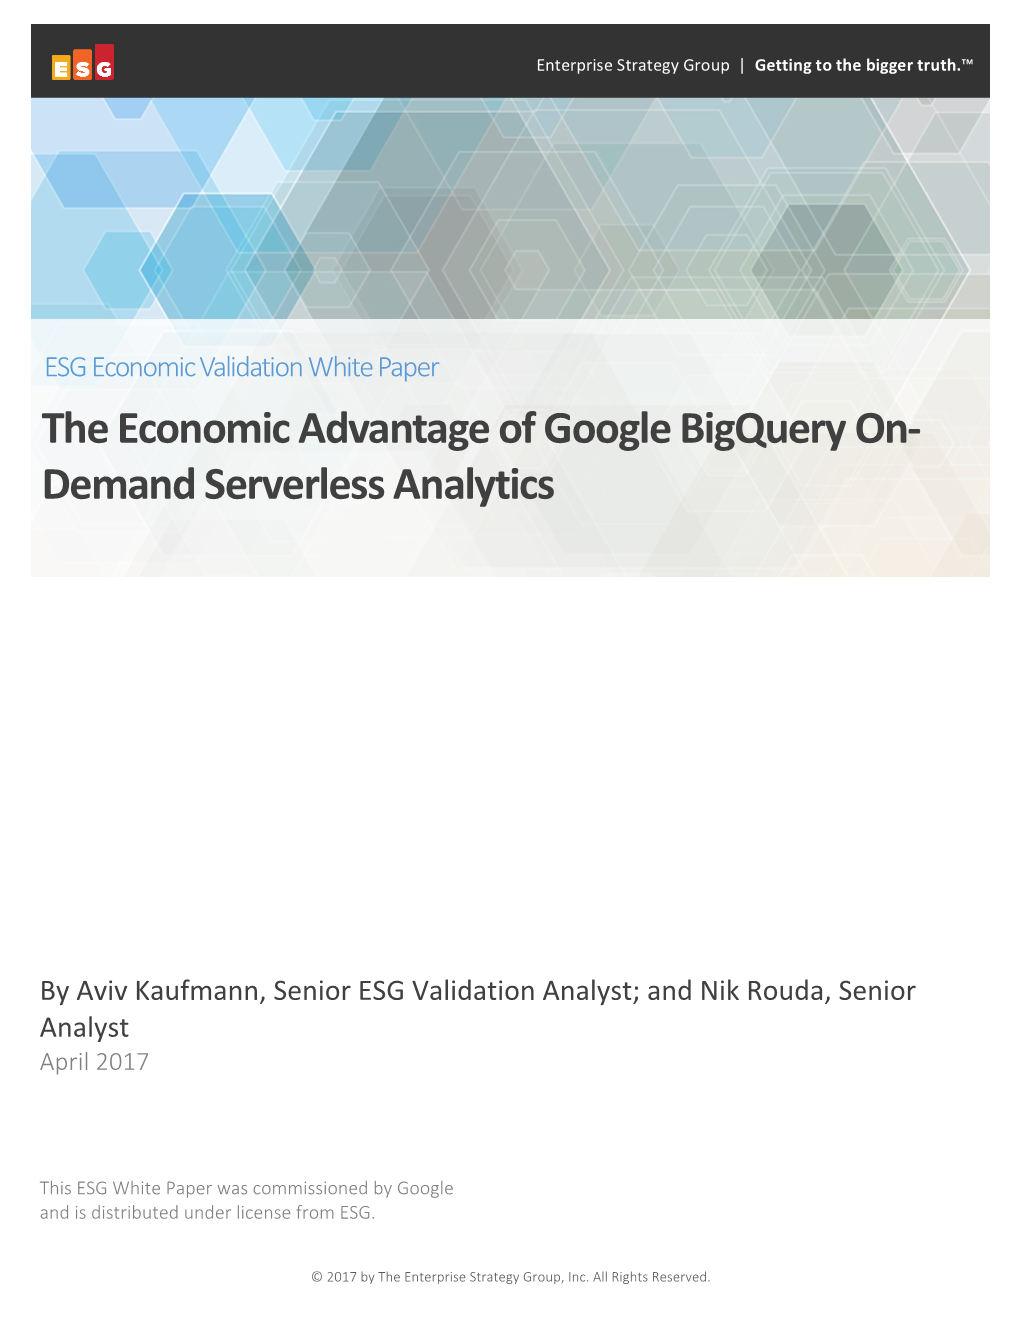 The Economic Advantage of Google Bigquery On- Demand Serverless Analytics